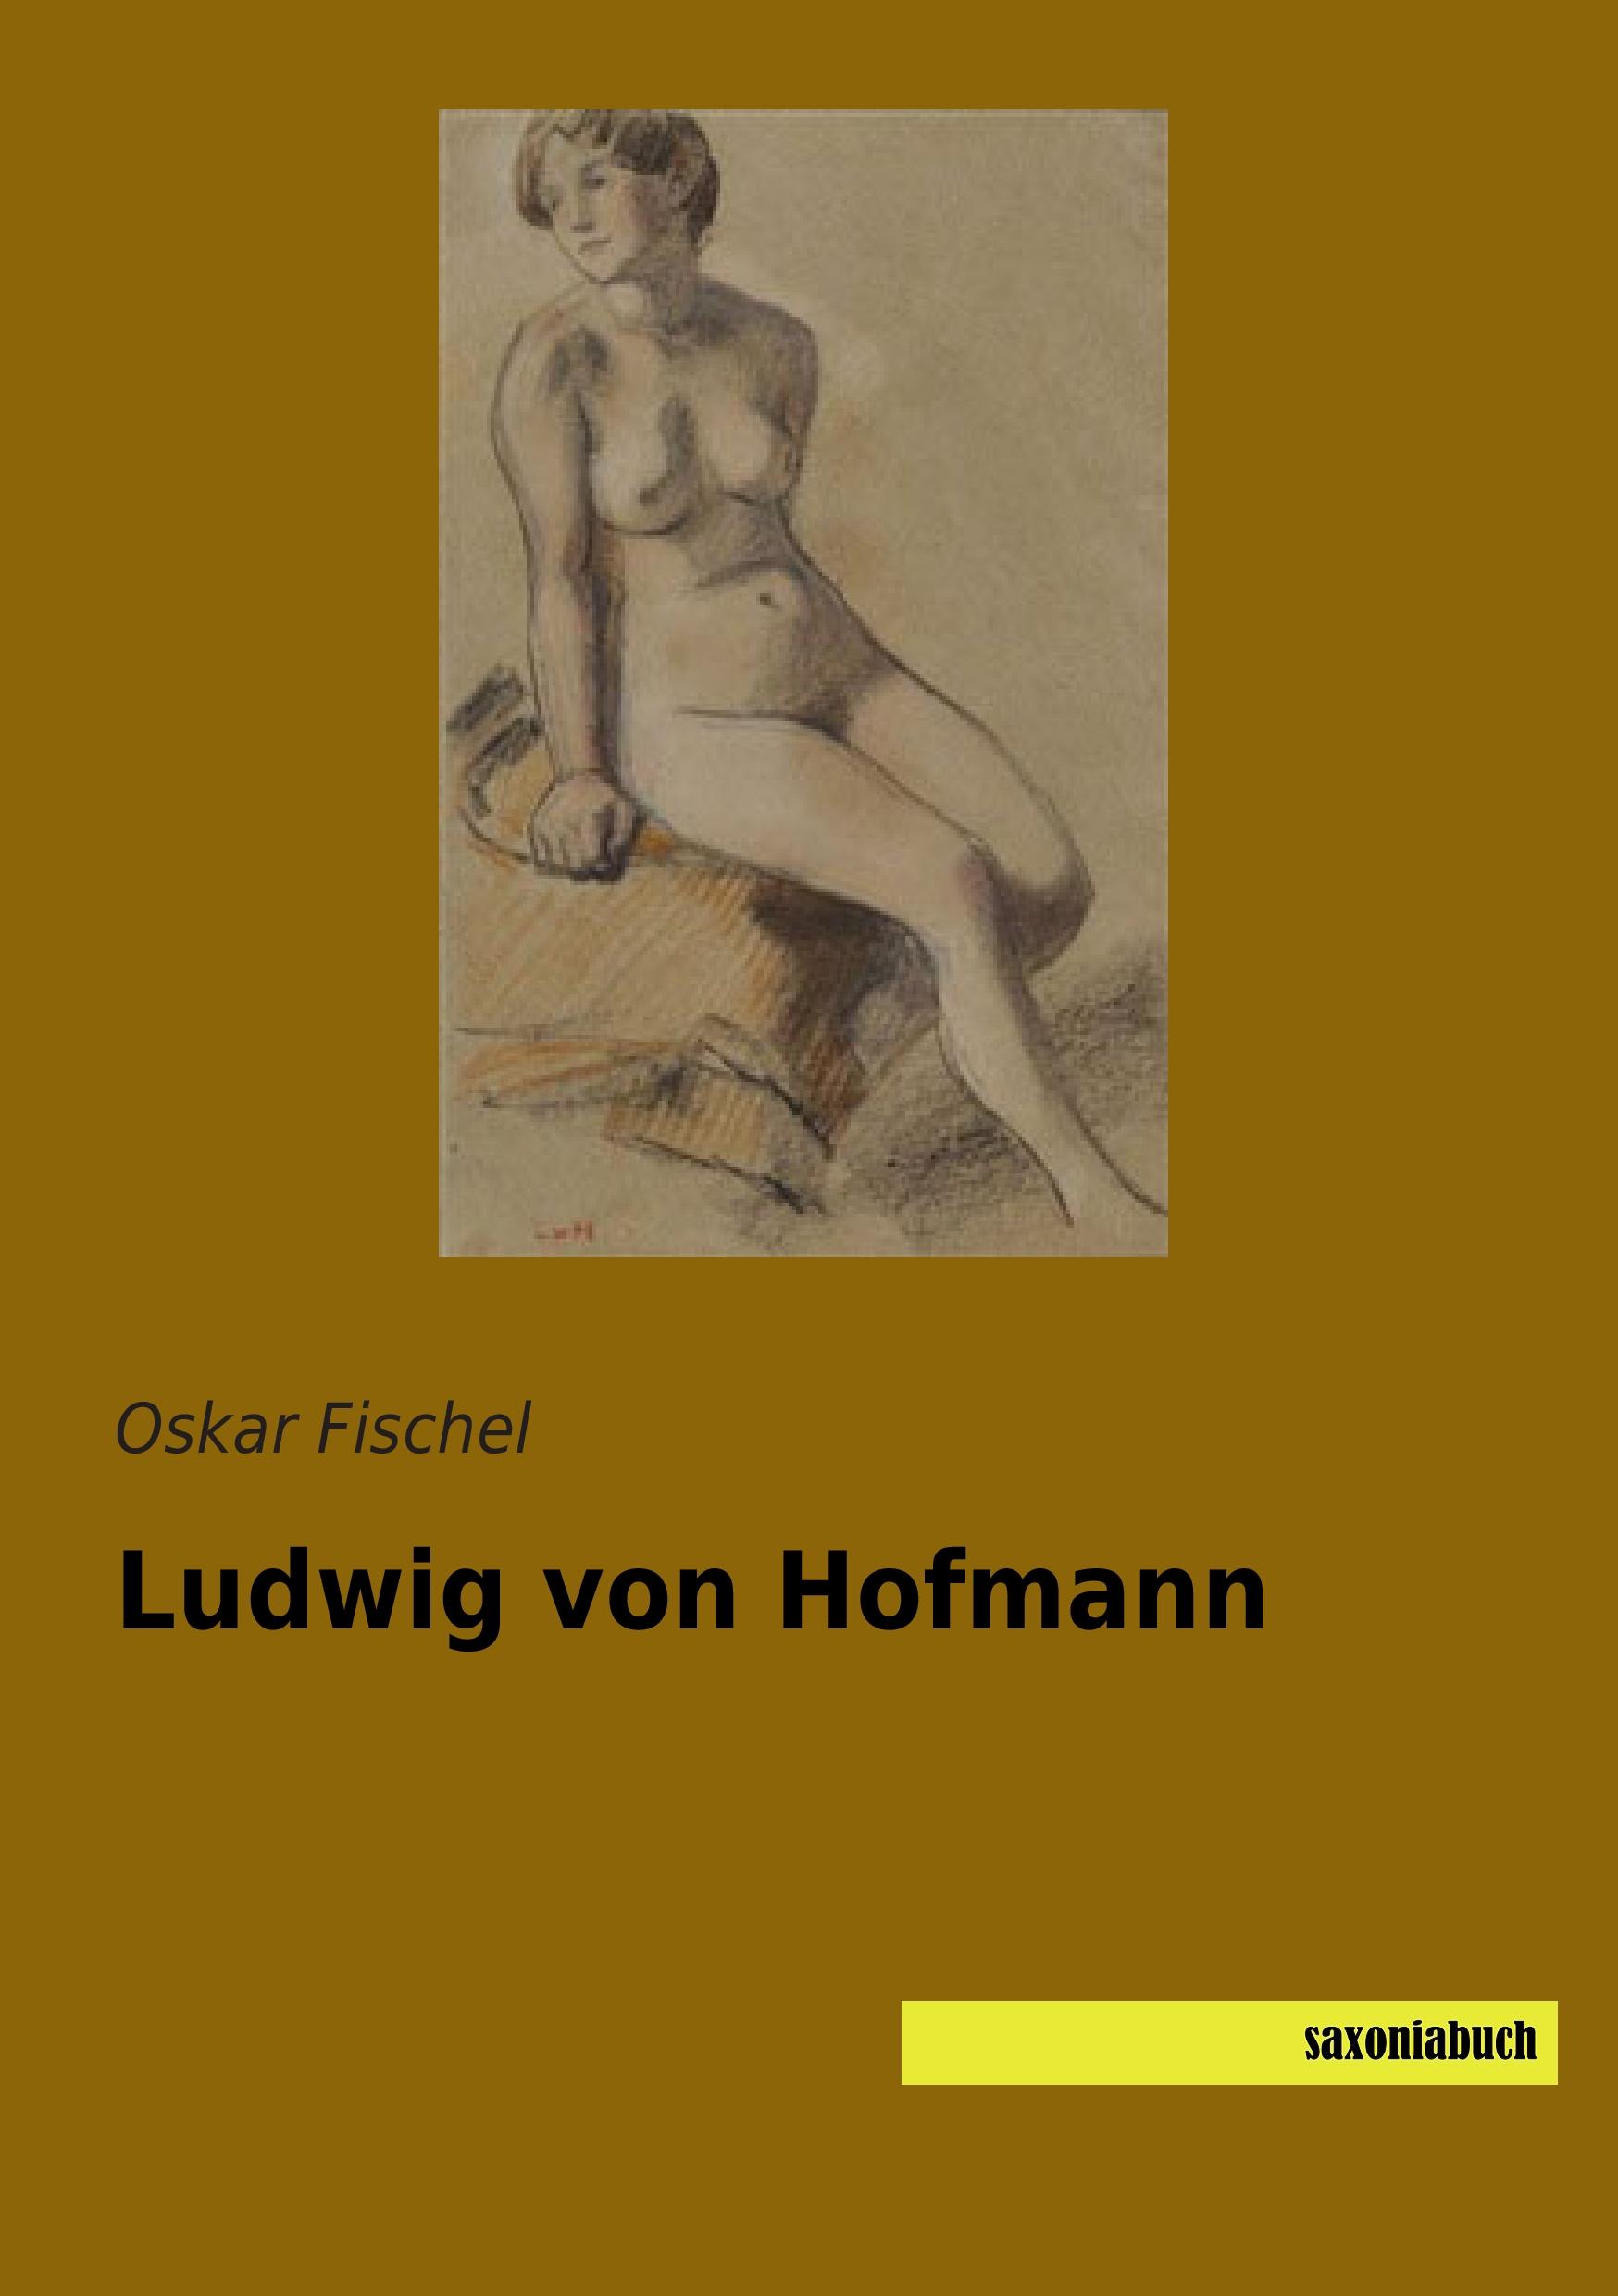 Ludwig von Hofmann / Oskar Fischel / Taschenbuch / Paperback / 116 S. / Deutsch / 2015 / saxoniabuch.de / EAN 9783957703651 - Fischel, Oskar